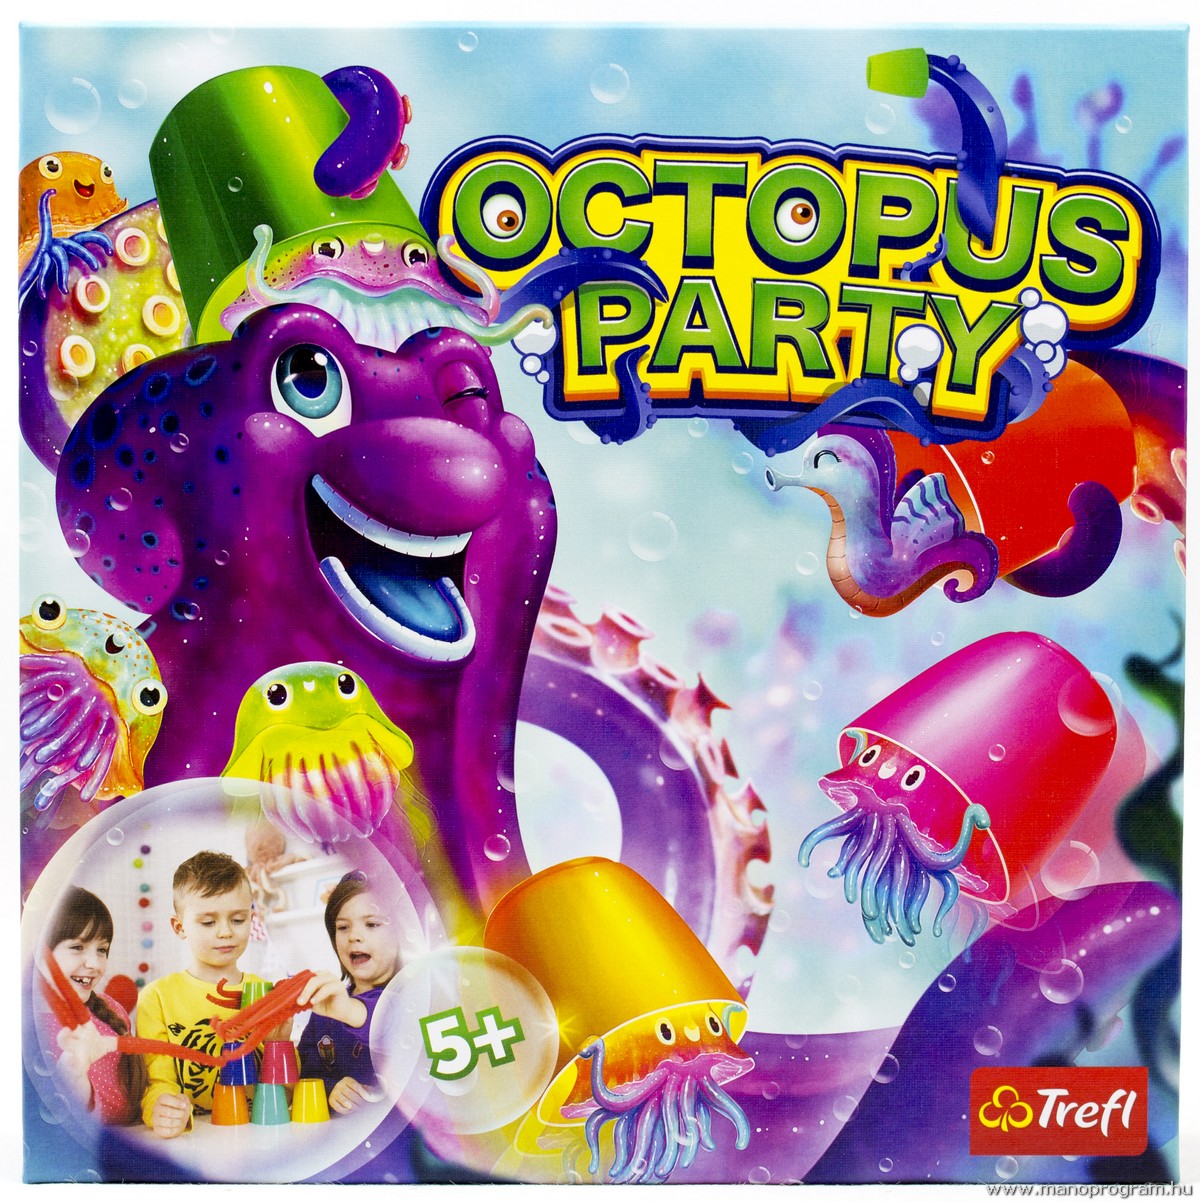 Octopus Party - Trefl